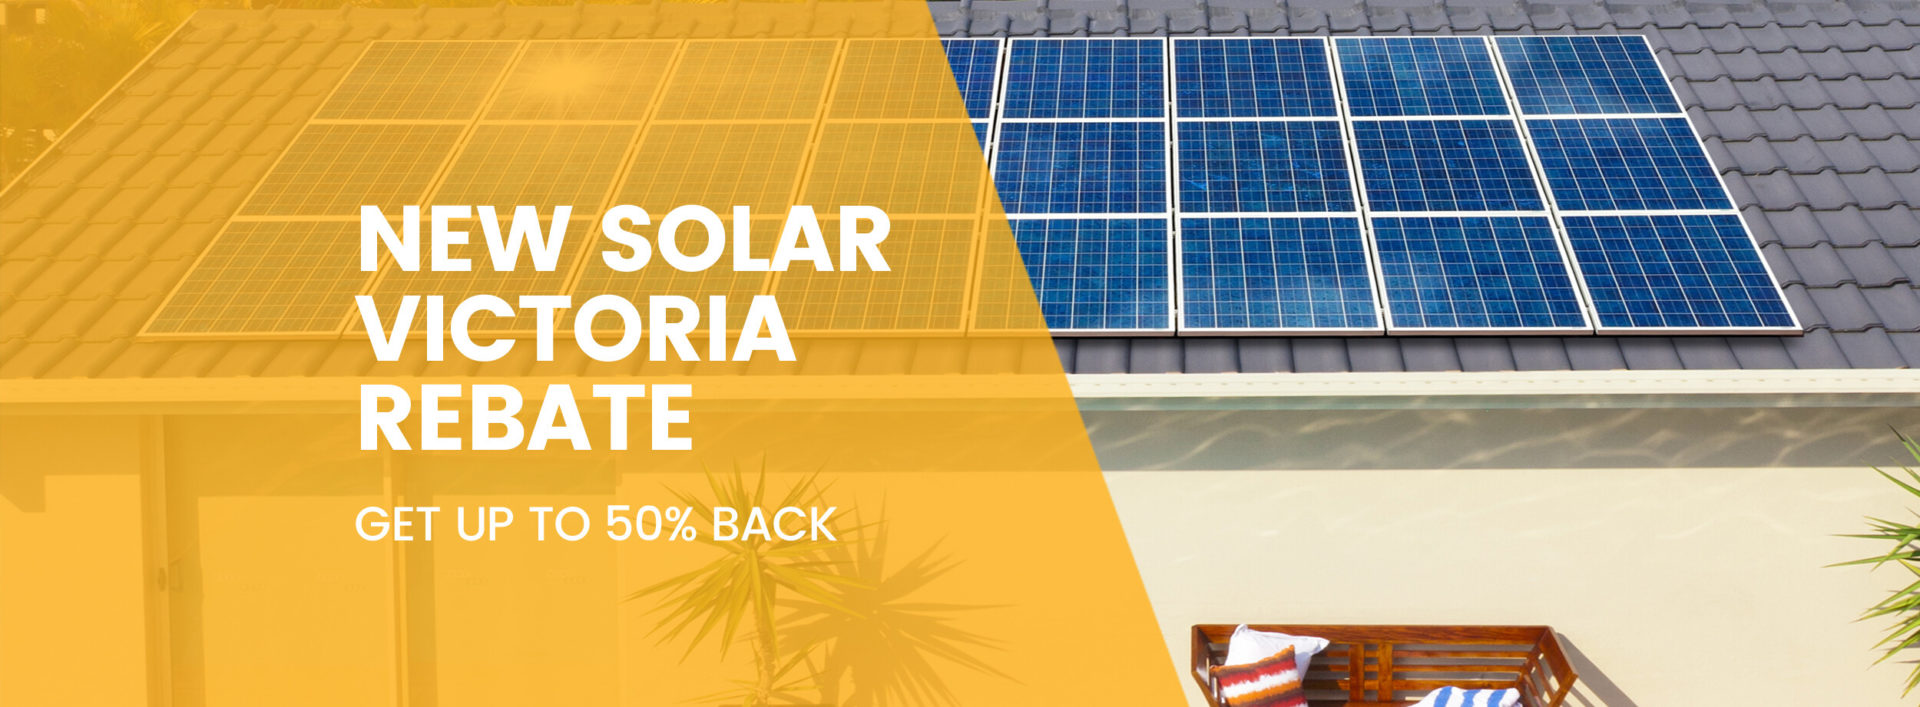 Victorian Solar Rebate Update June 2020 Solar Choice